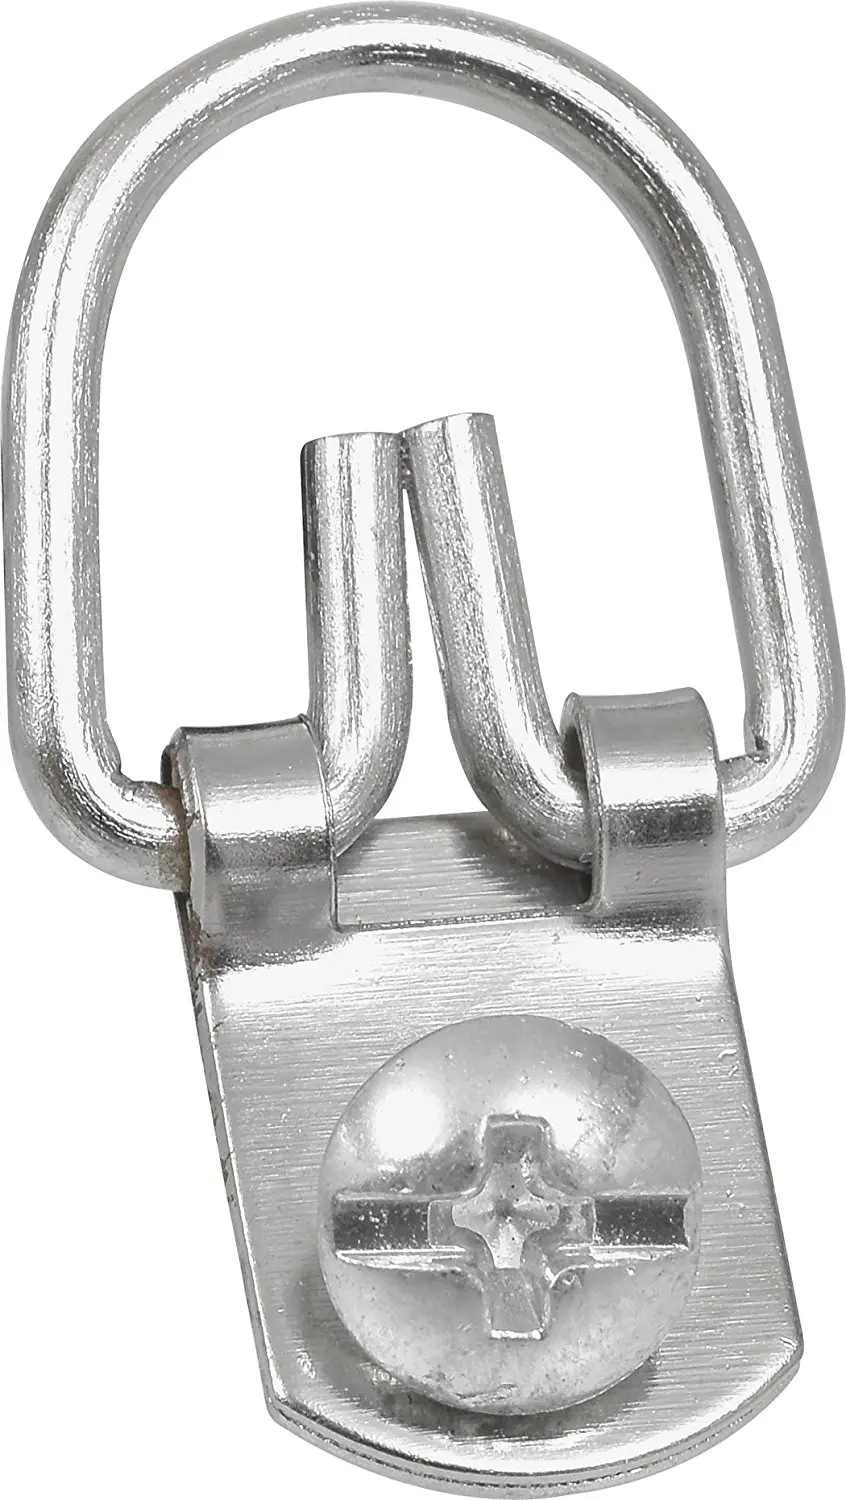 7x3.5mm Silver Acrylic Letter Beads, Flat Round Alphabet Bead, Friendship  Bracelet, Initial Bead, Monogram Jewelry, Silver & Black Letters 